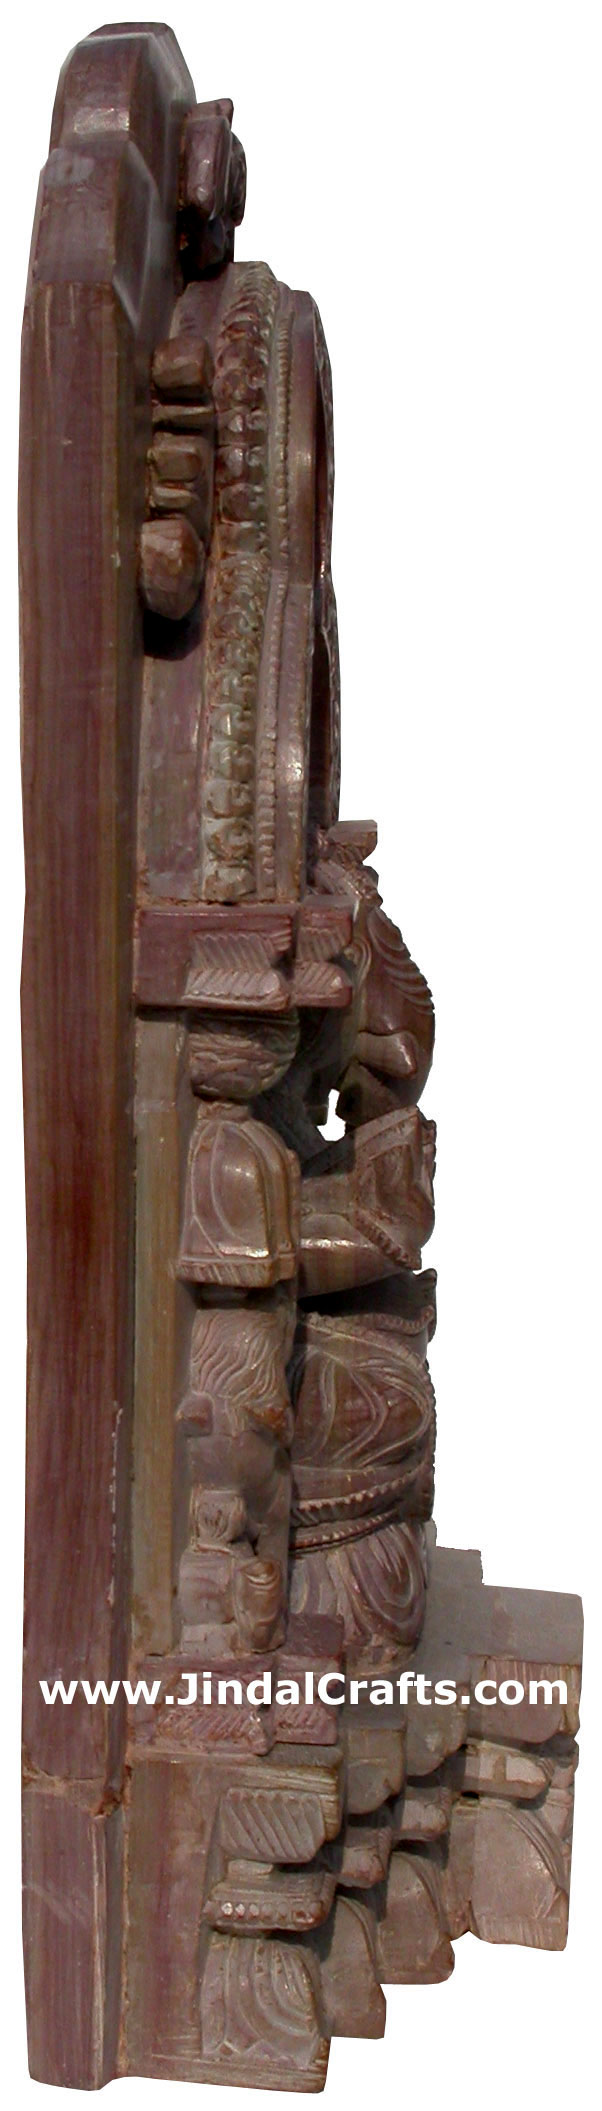 Lord Ganesha Vinayaka Ganpati Hand Carved Indian Hinduism Carving Sculpture Idol